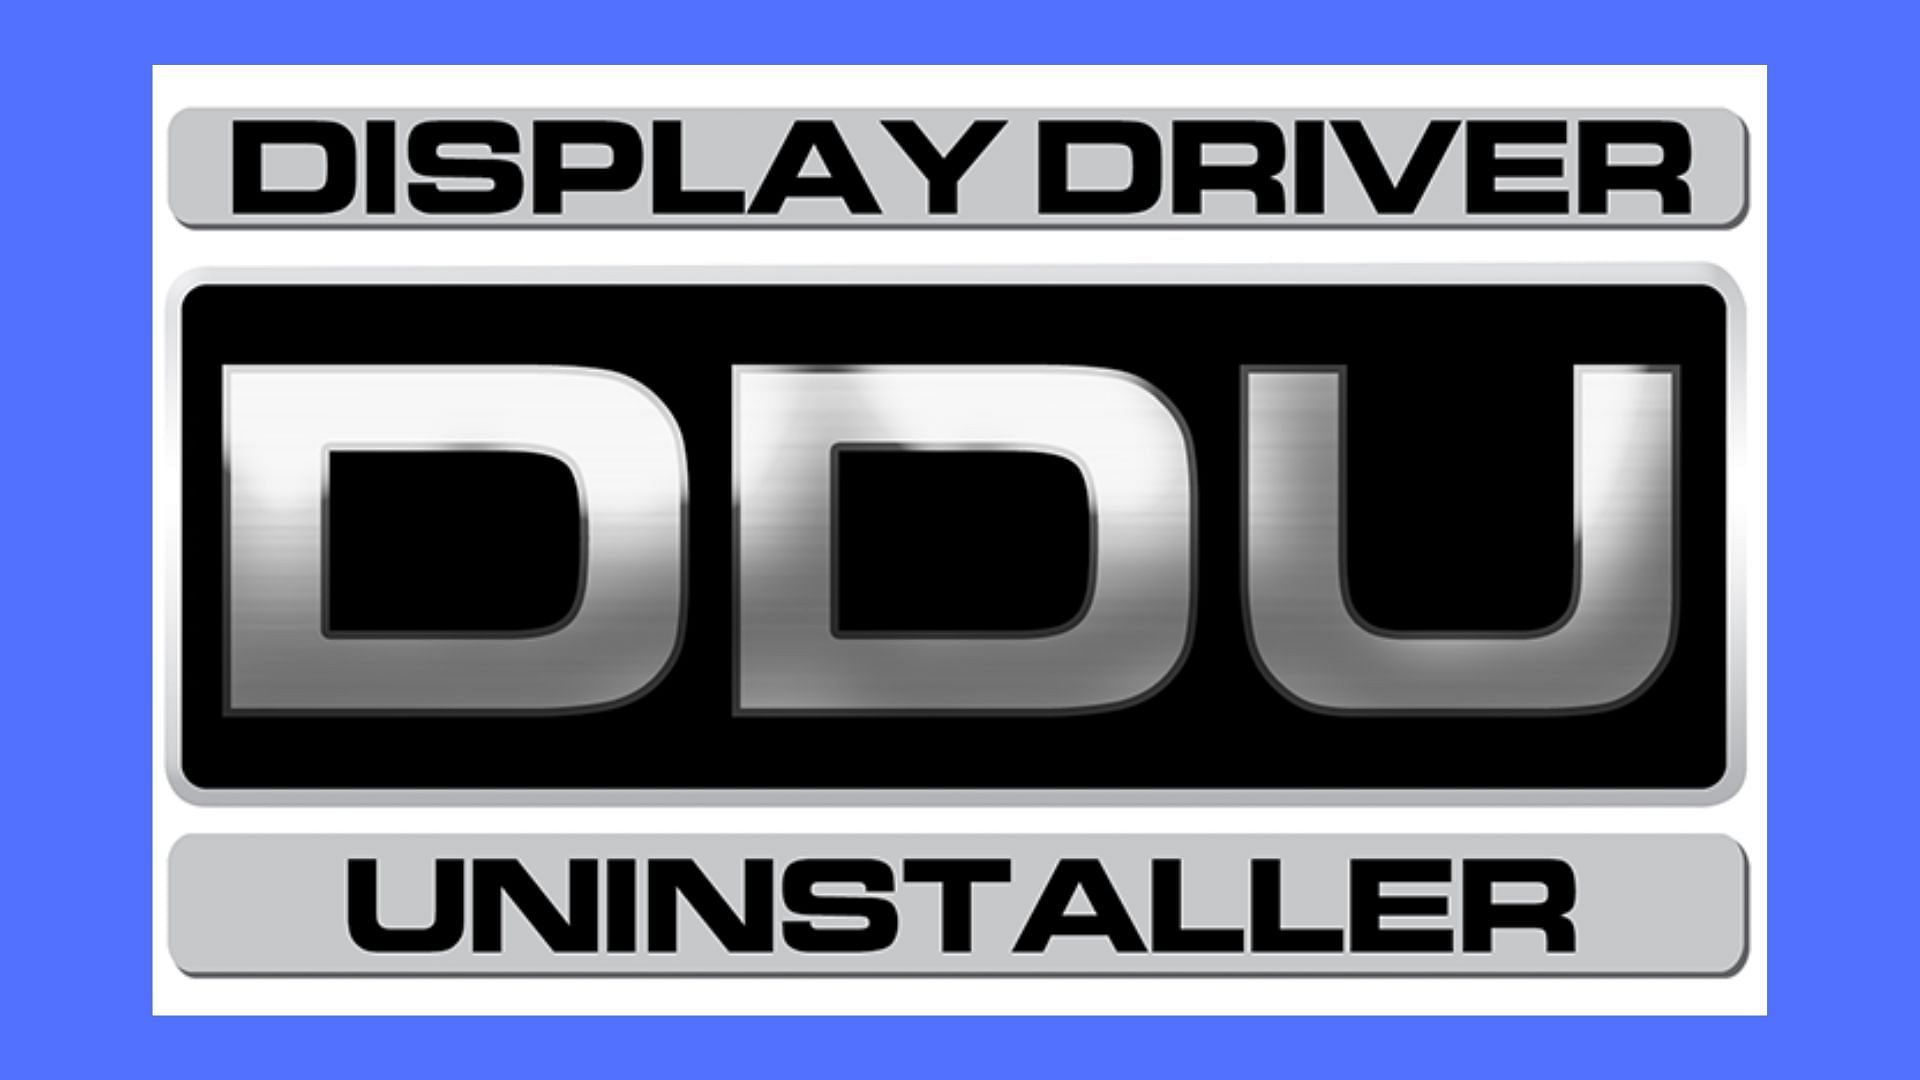 DDU logo on blue background